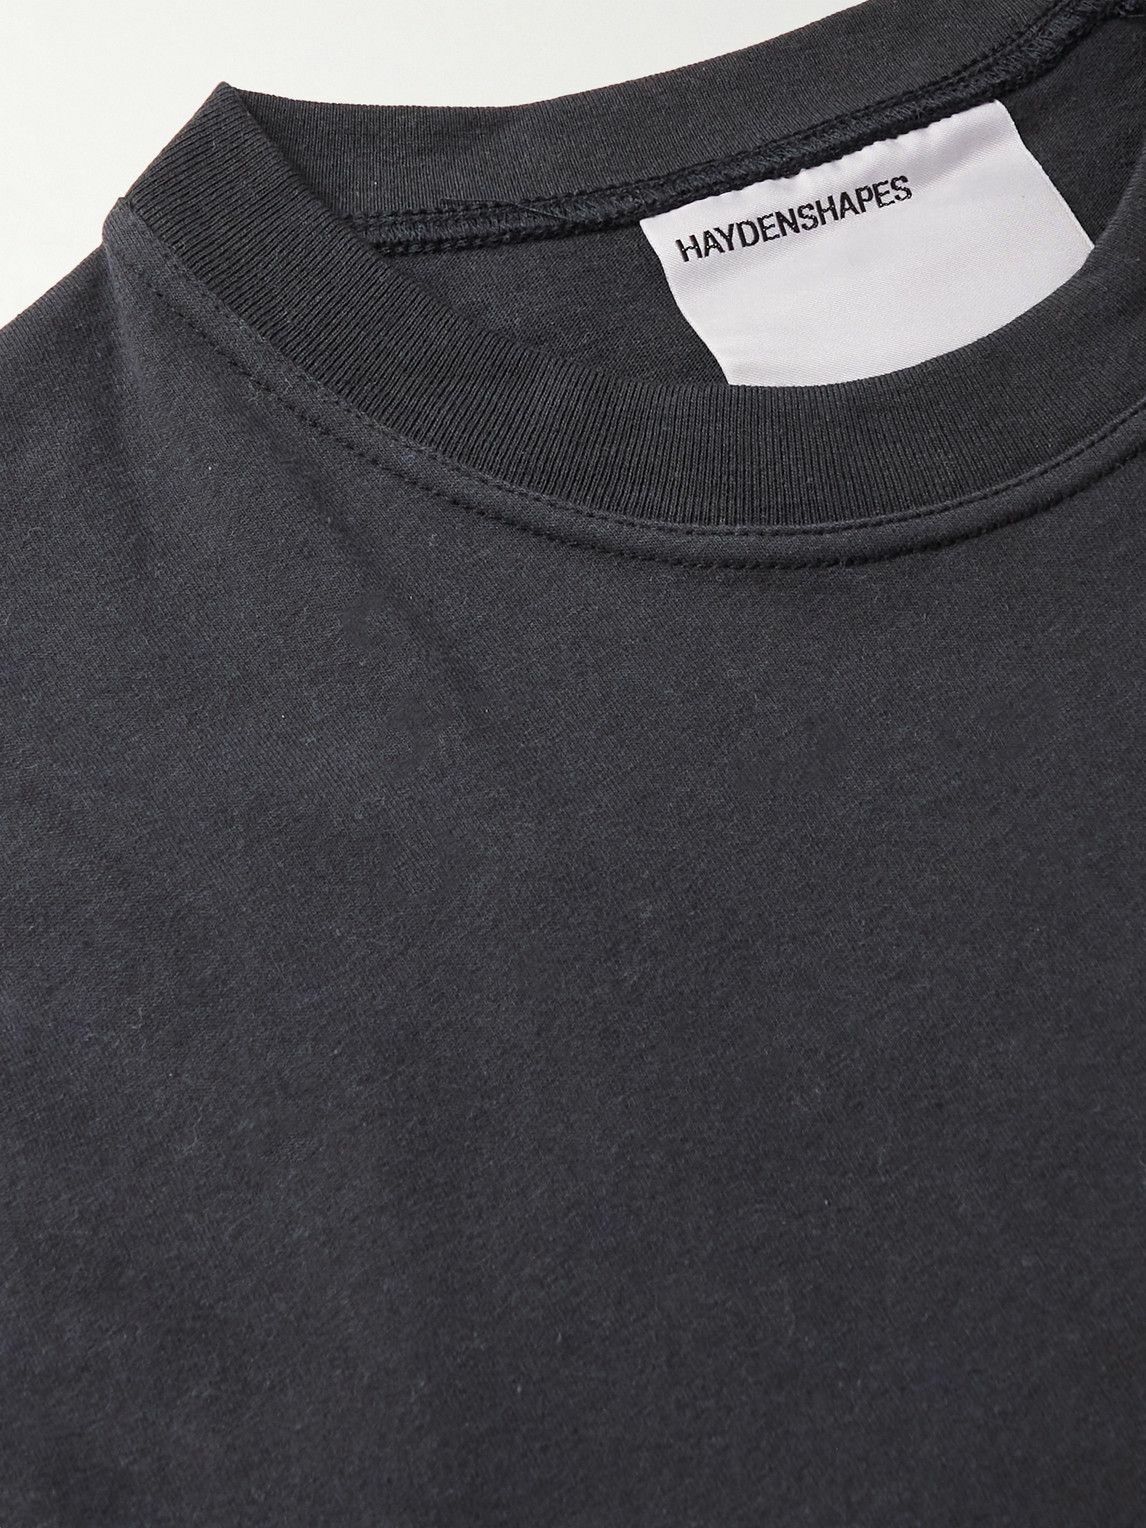 HAYDENSHAPES - Shapers Logo-Print Cotton-Jersey T-Shirt - Black ...